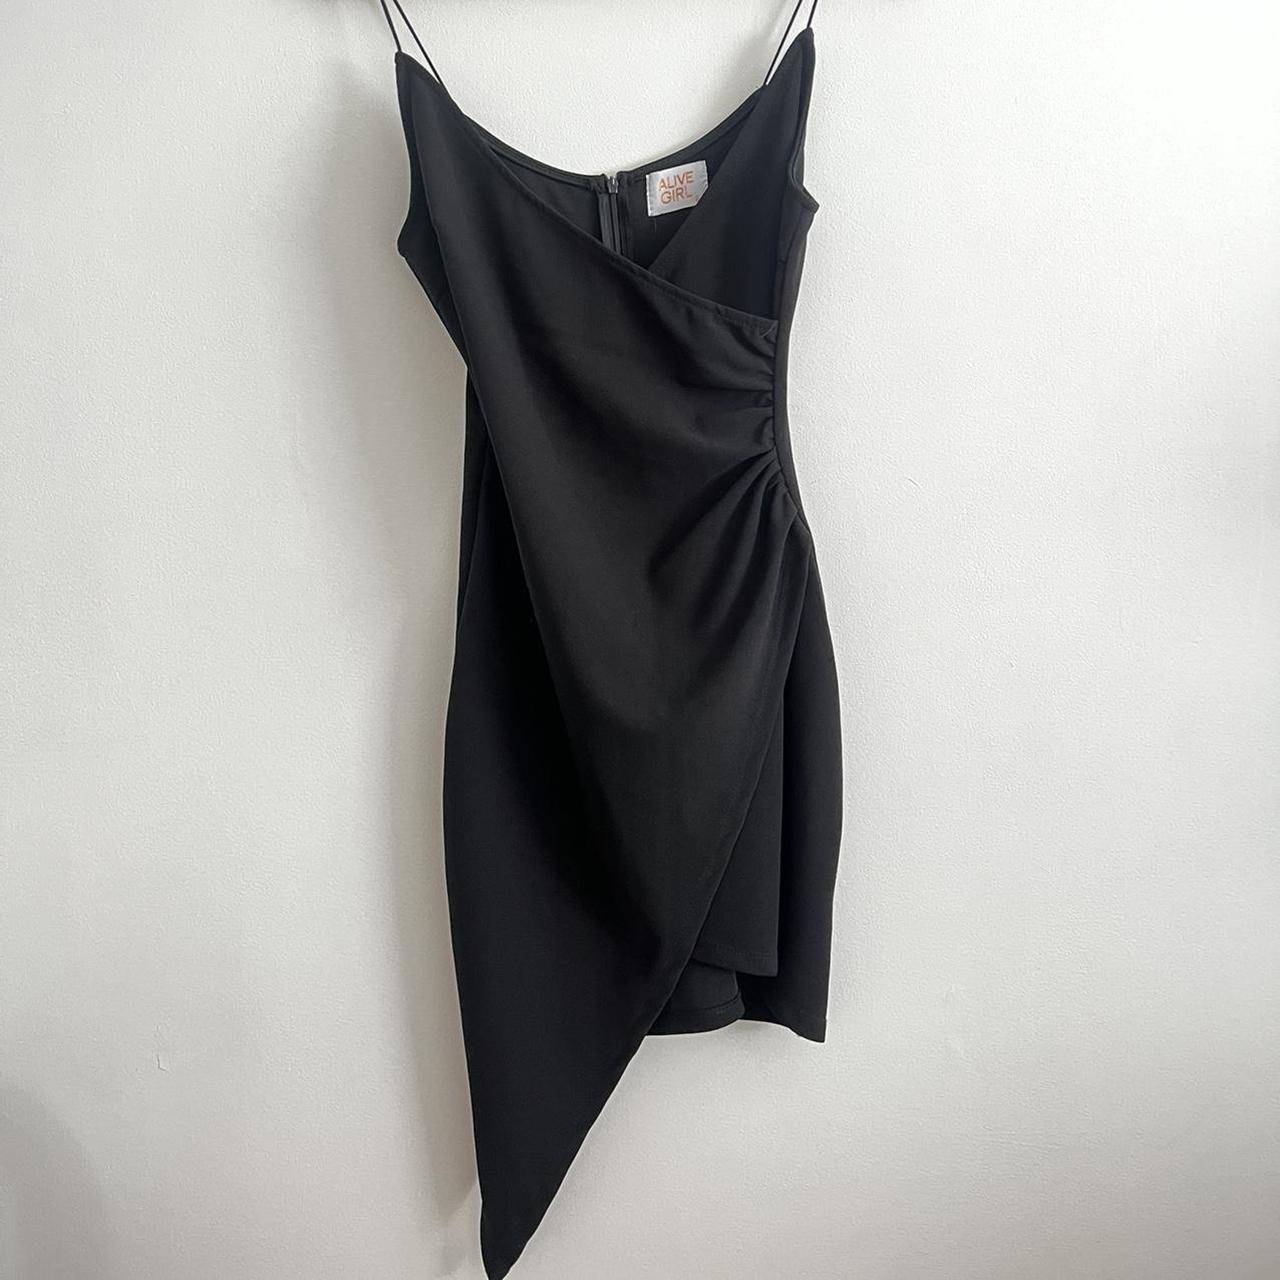 black mini dress worn once size 8 but fits a 6 nicely - Depop